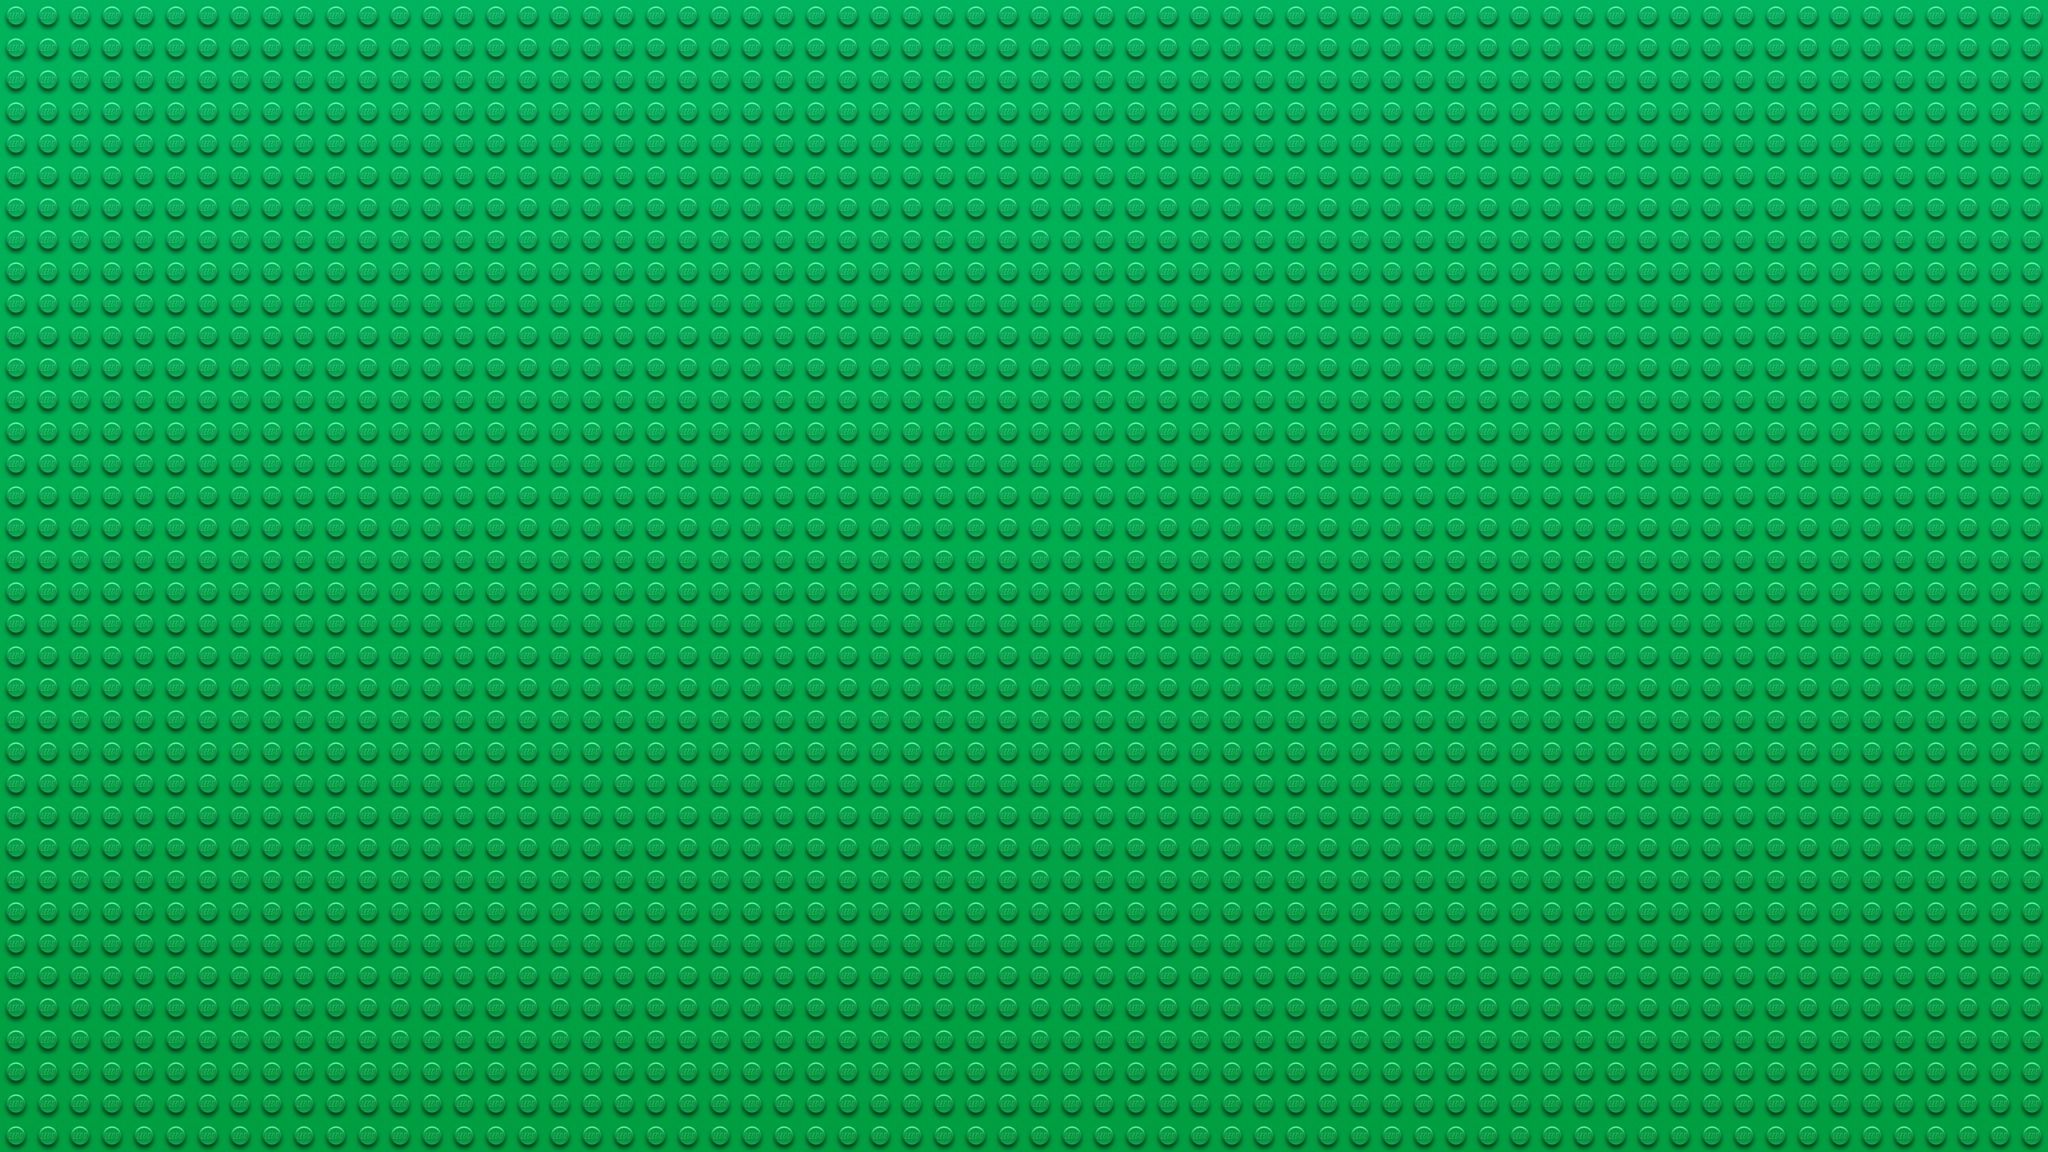 Hd Lego Wallpapers Hd Desktop Backgrounds 2048x1152